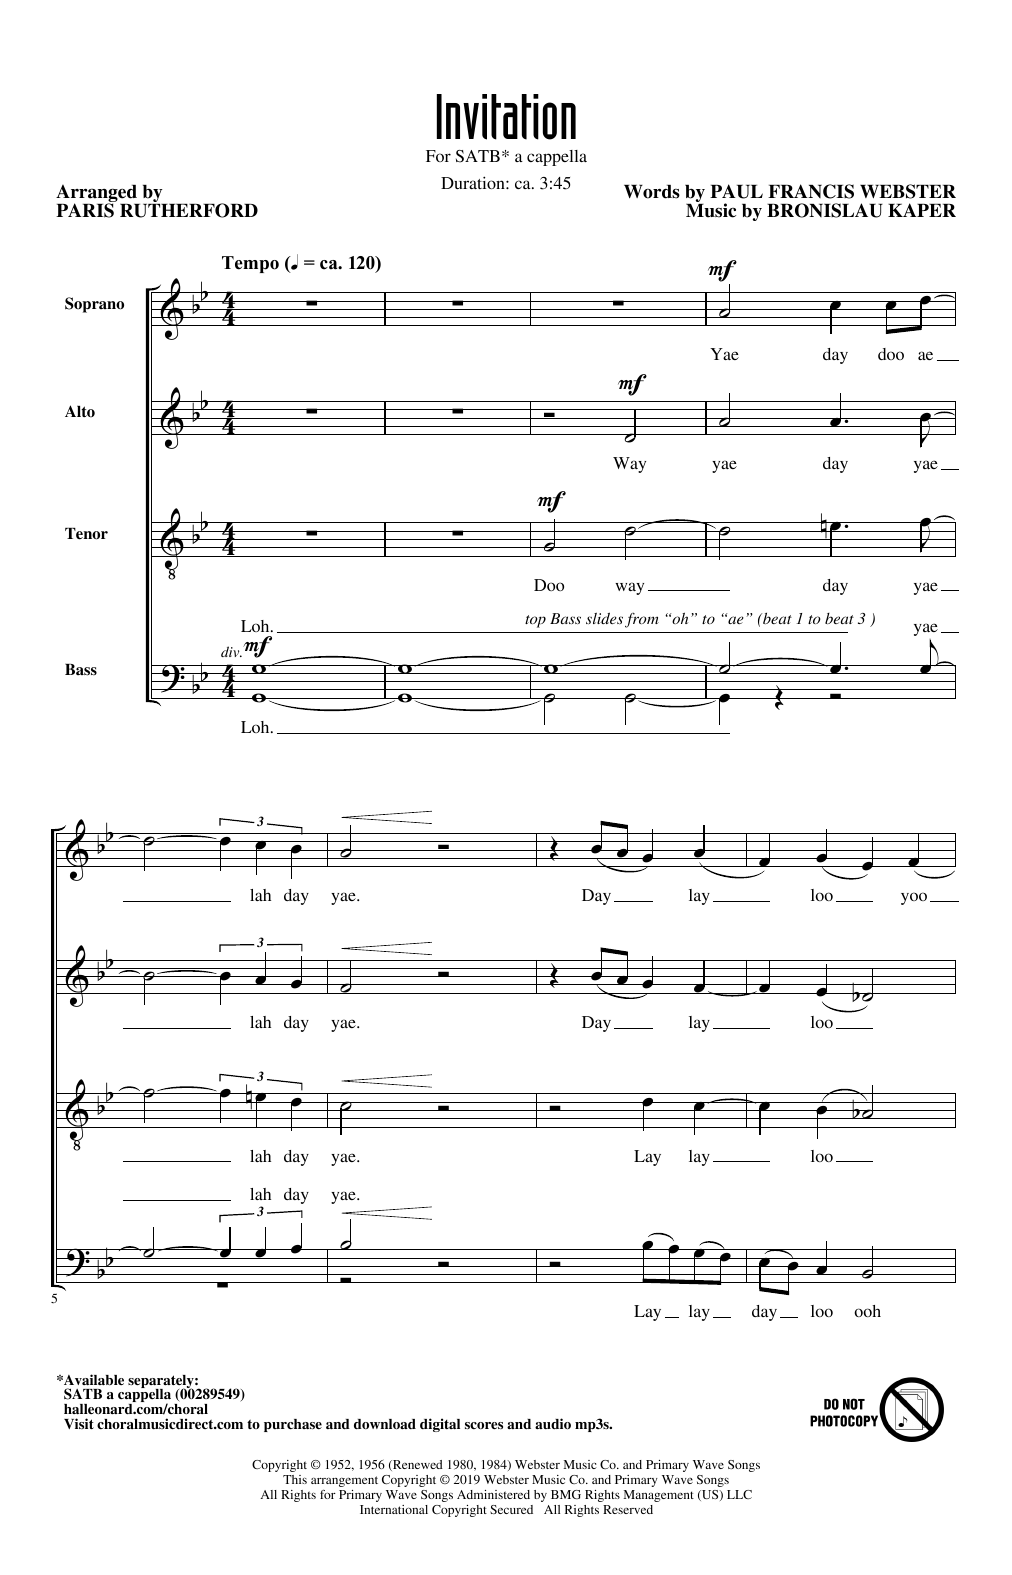 Invitation (arr. Paris Rutherford) (SATB Choir) von Paul Francis Webster and Bronislau Kaper